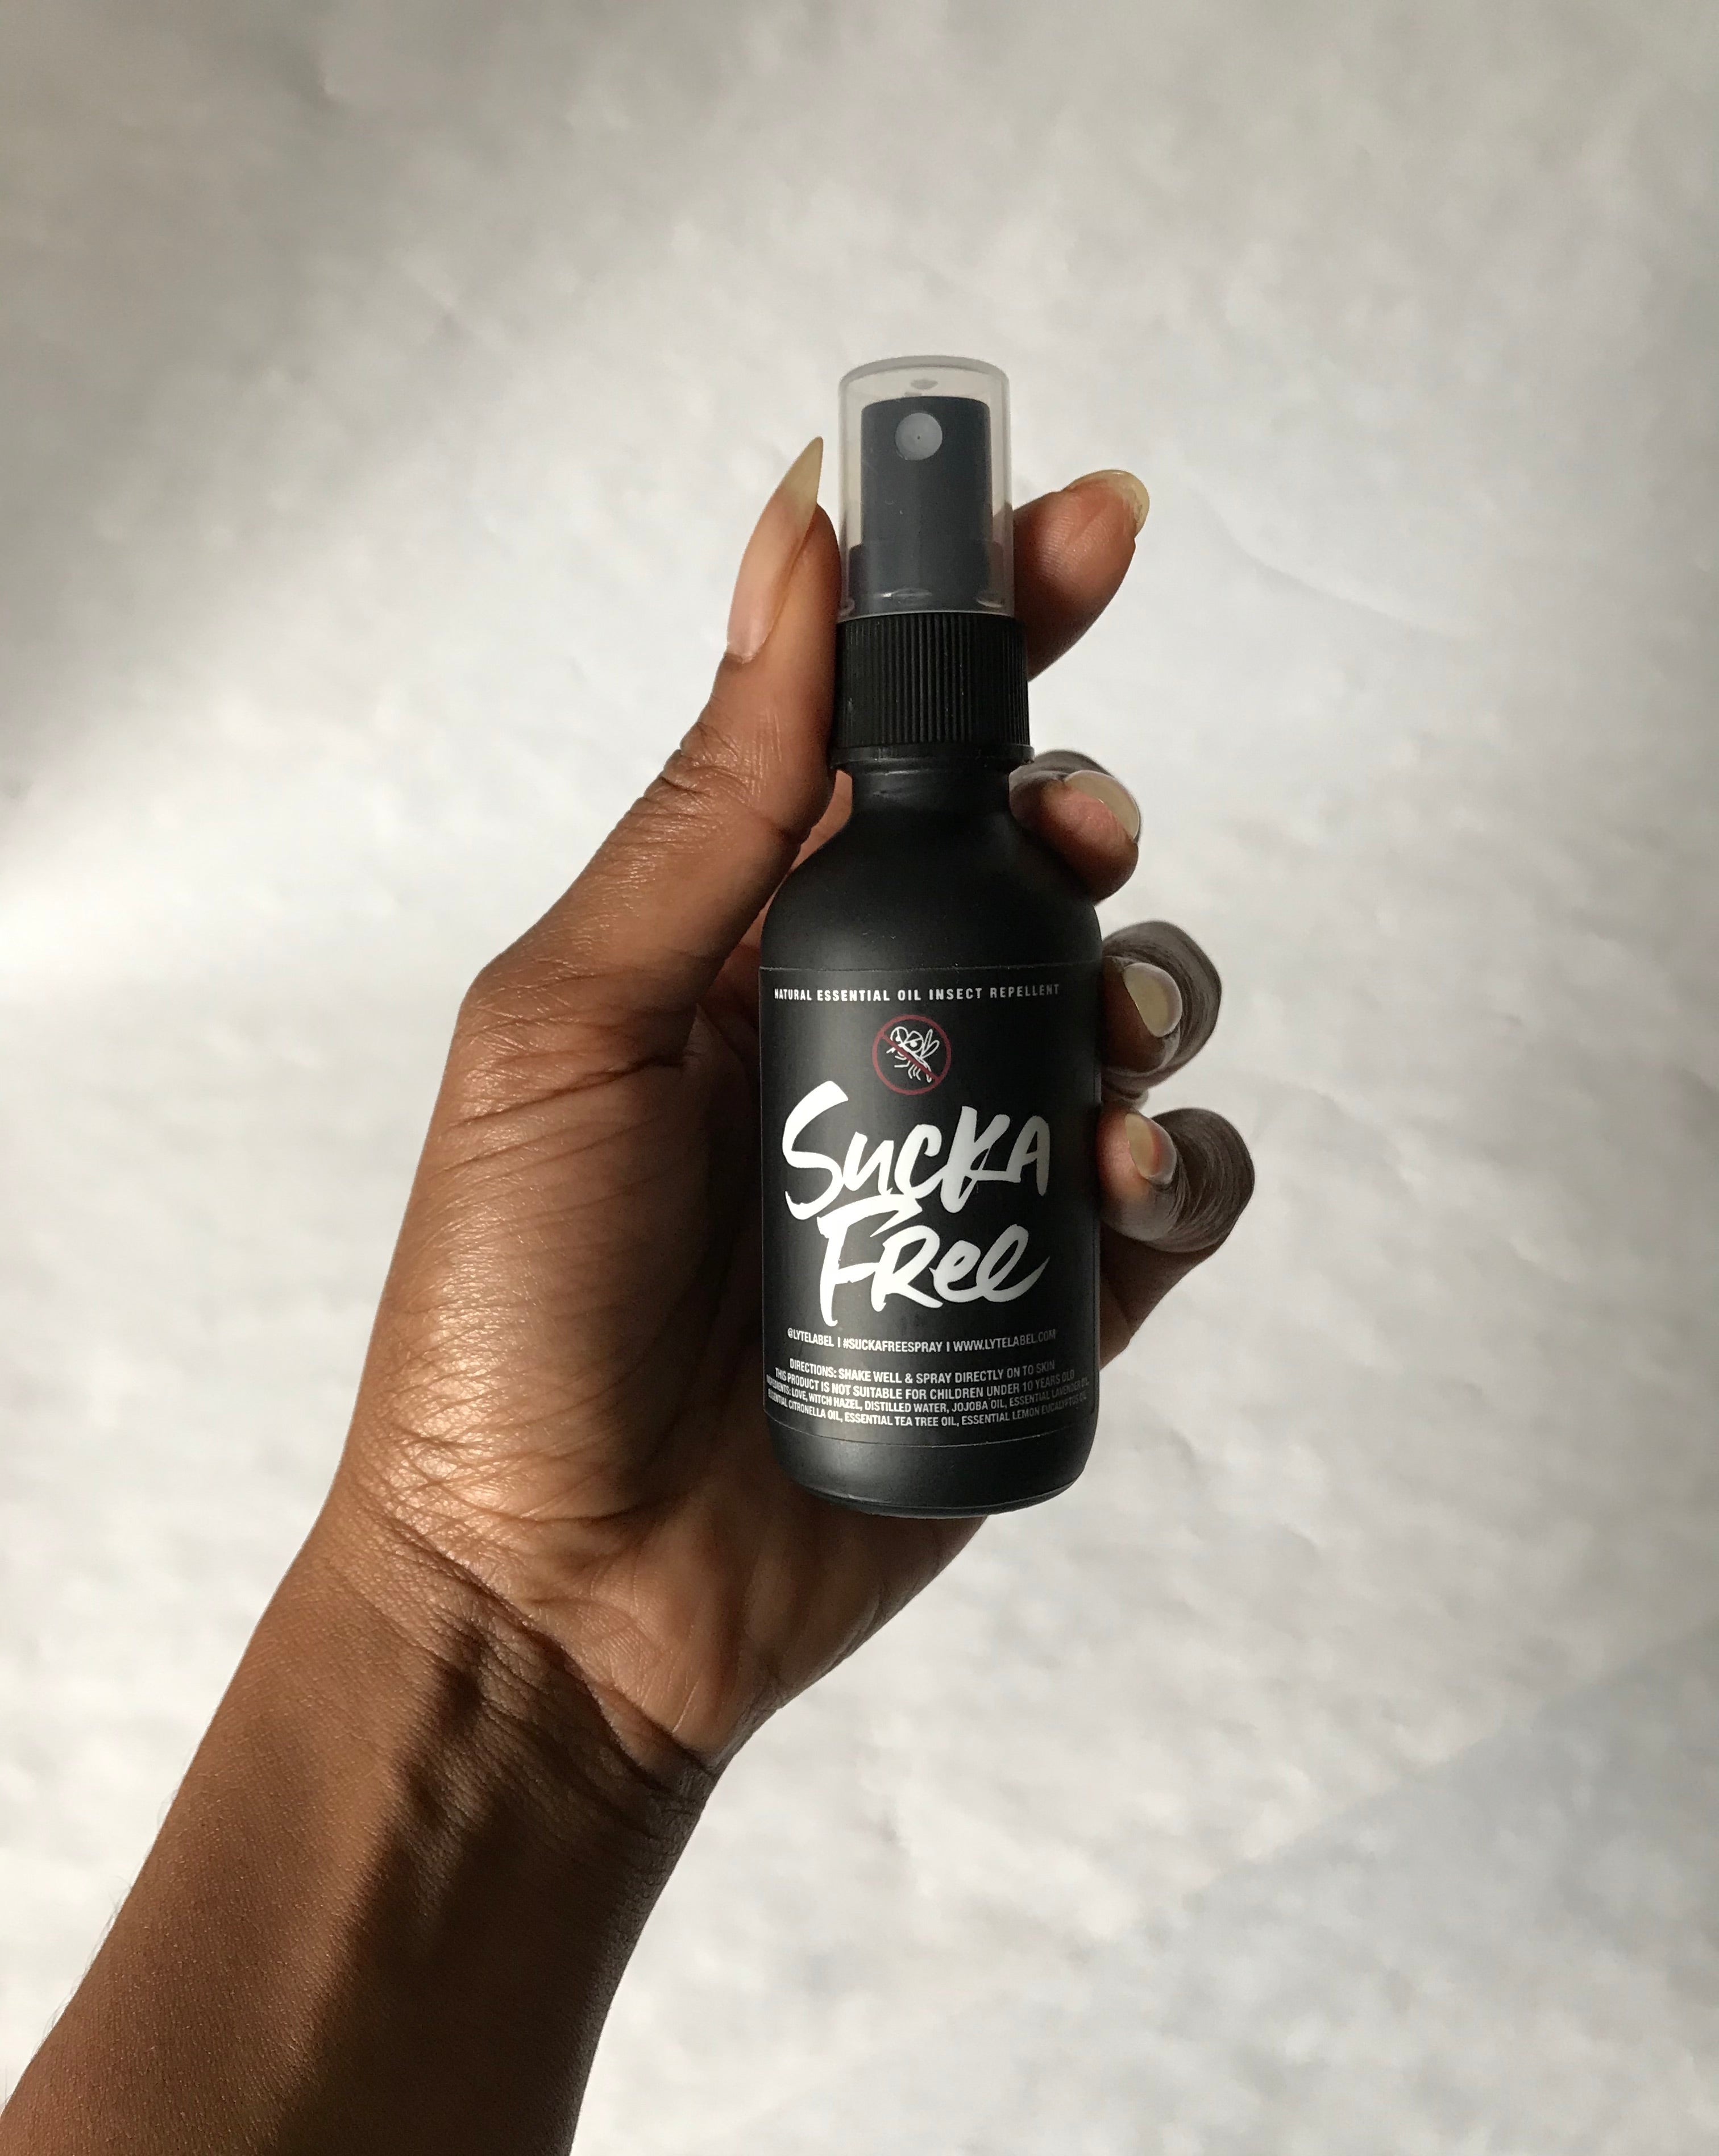 Sucka Free Spray